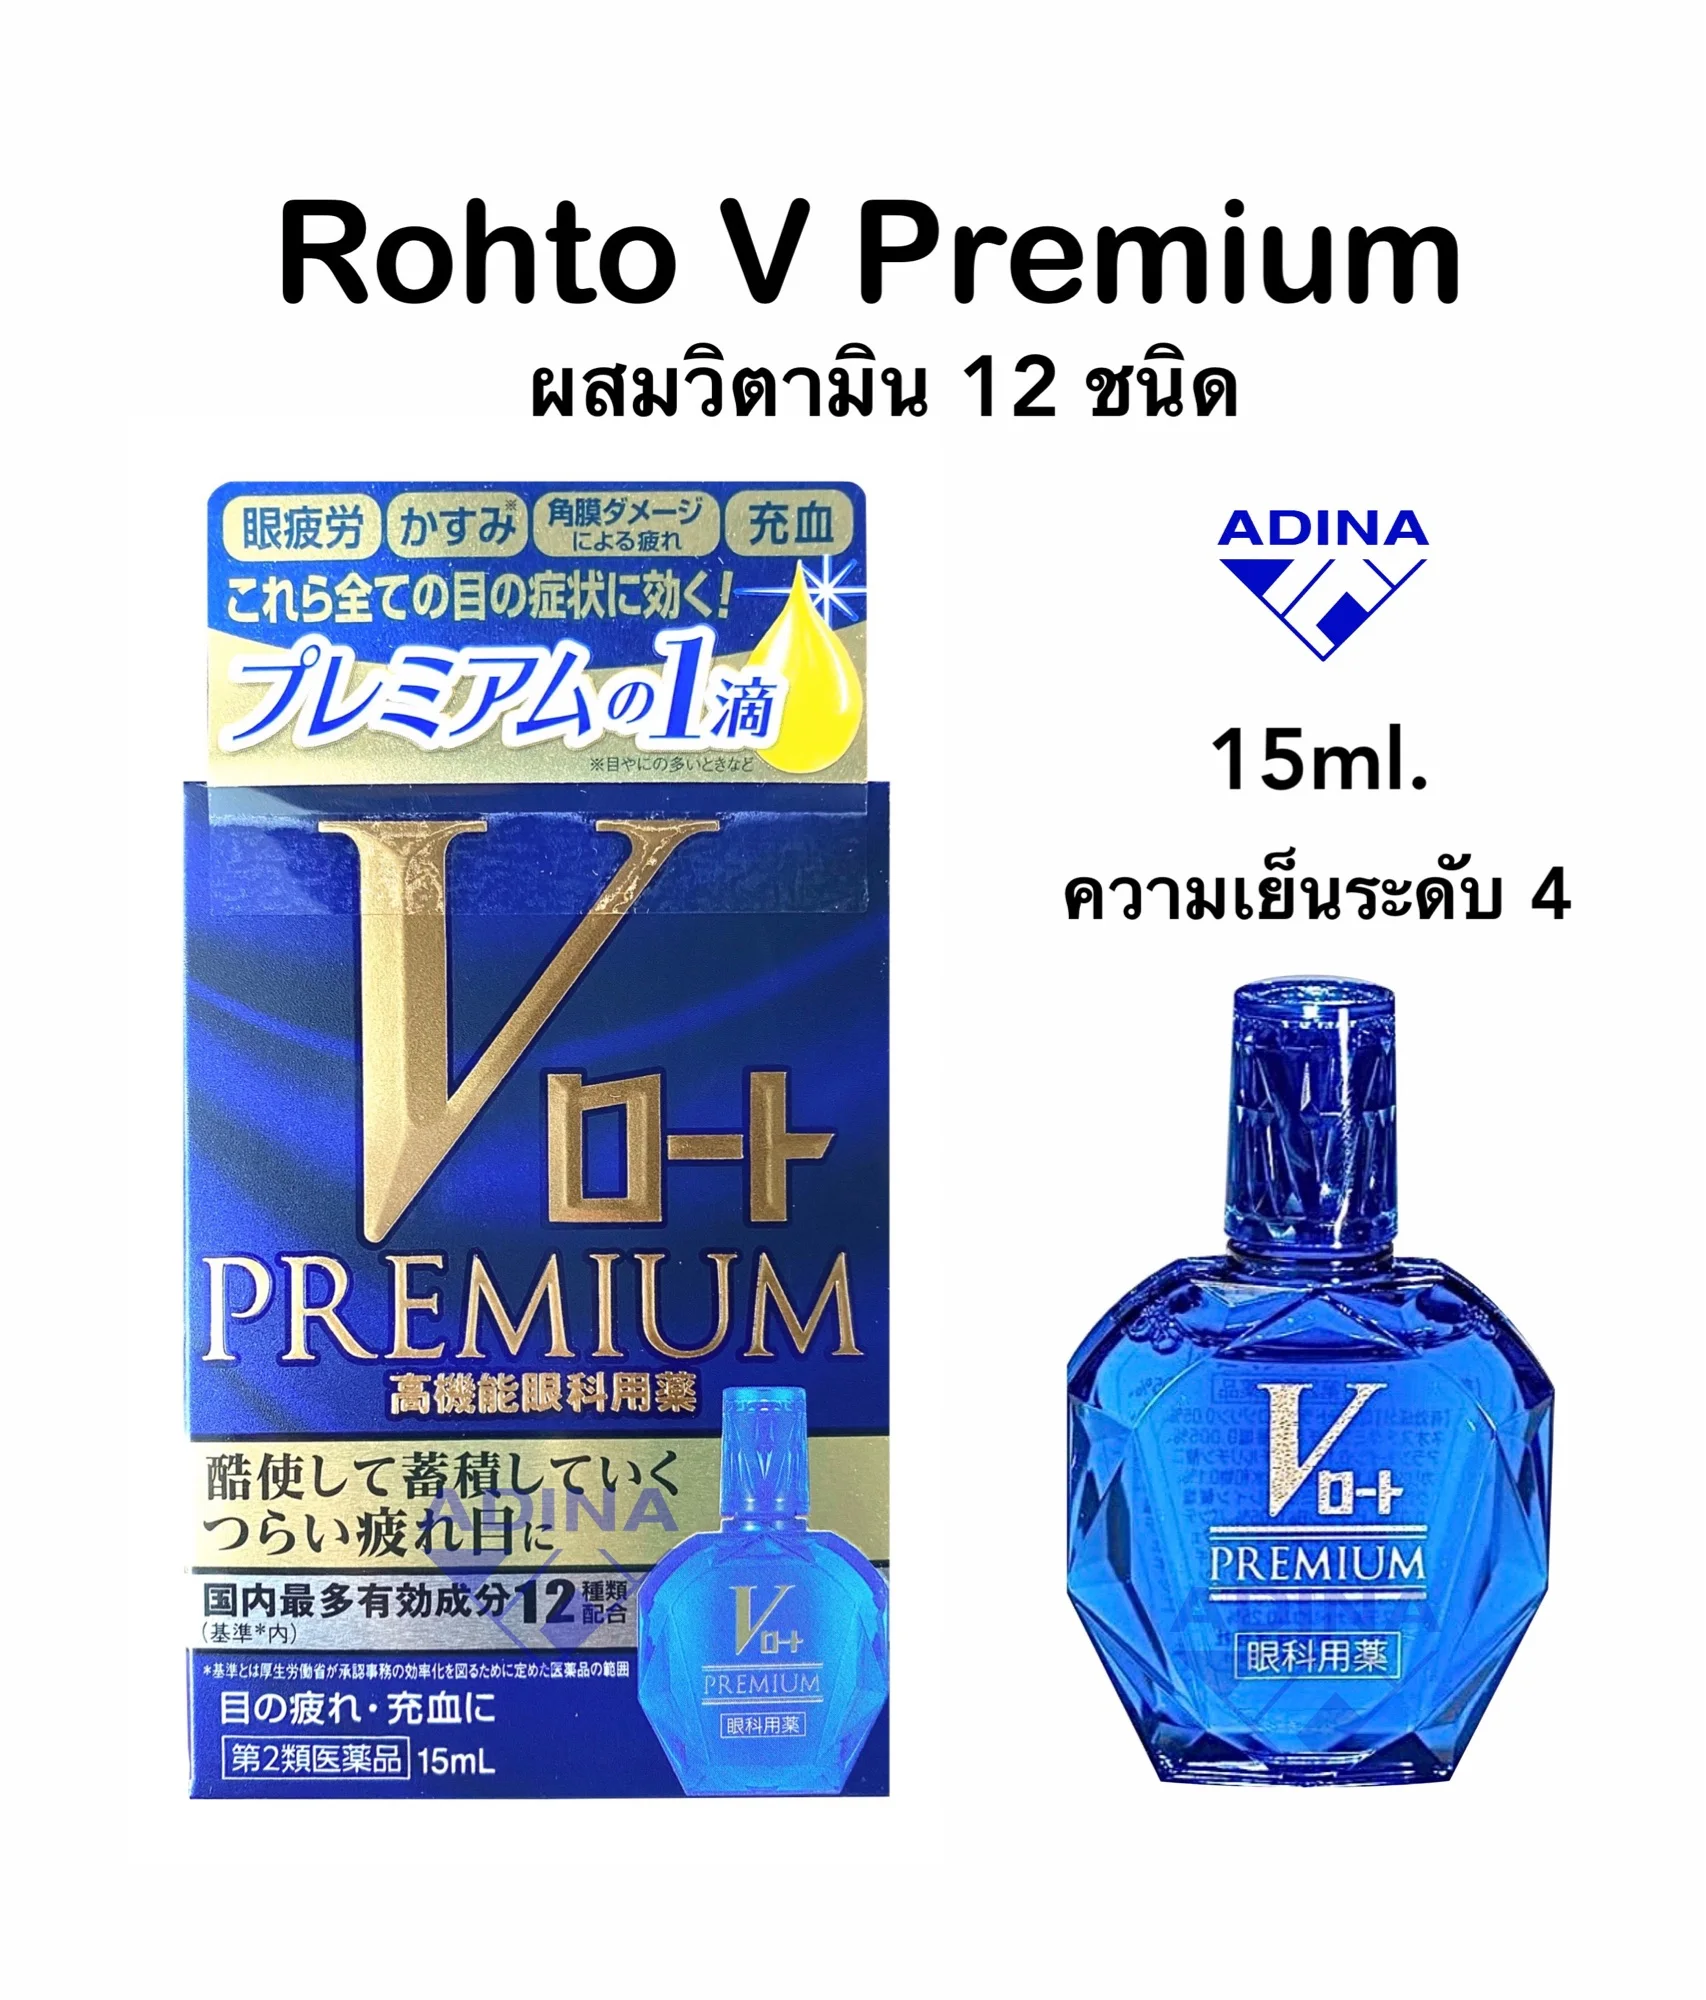 Rohto V Premium 15ml. ผสมวิตามิน 12 ชนิด